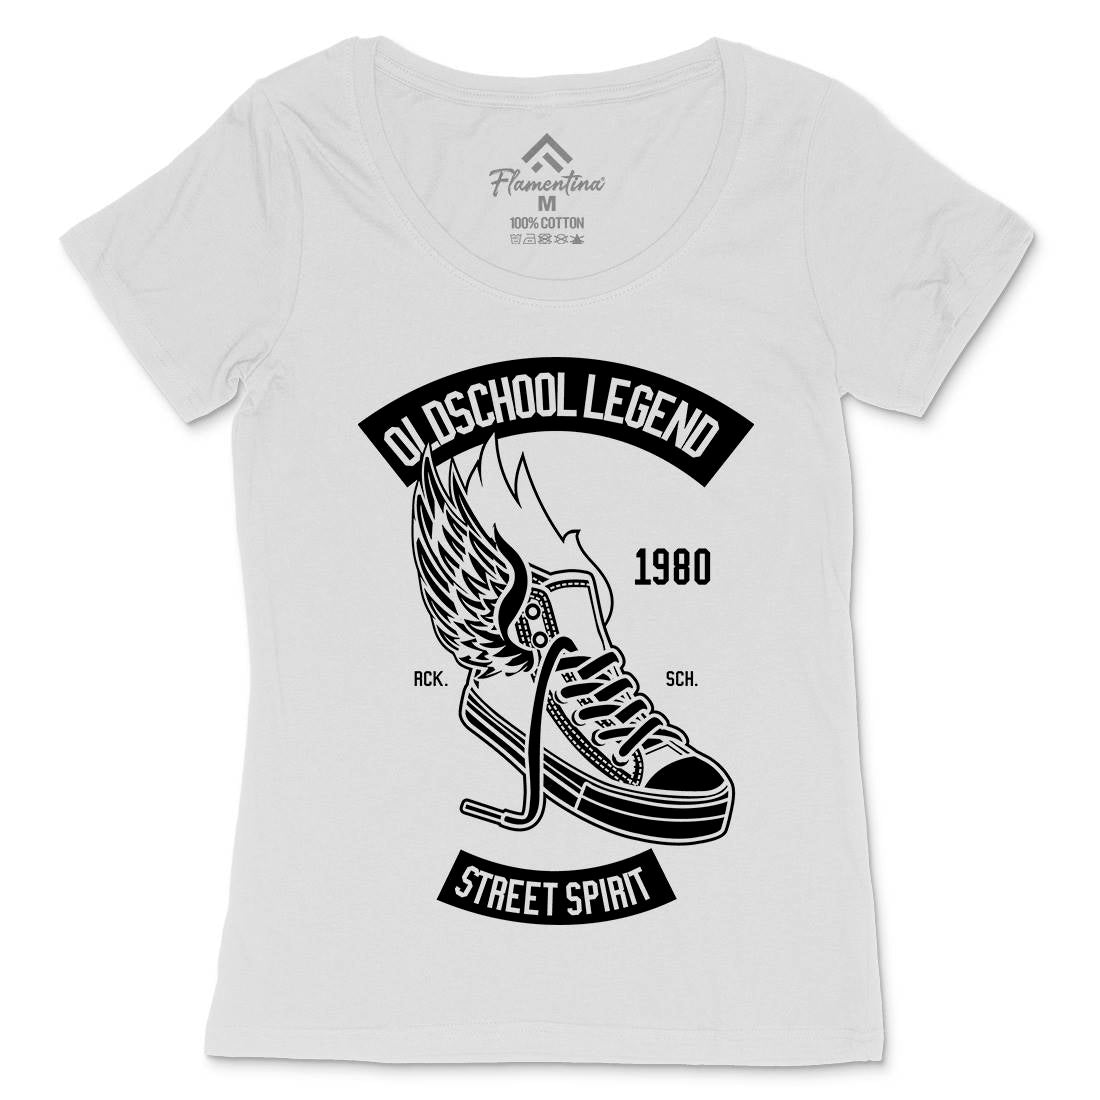 Oldschool Legend Womens Scoop Neck T-Shirt Retro B594